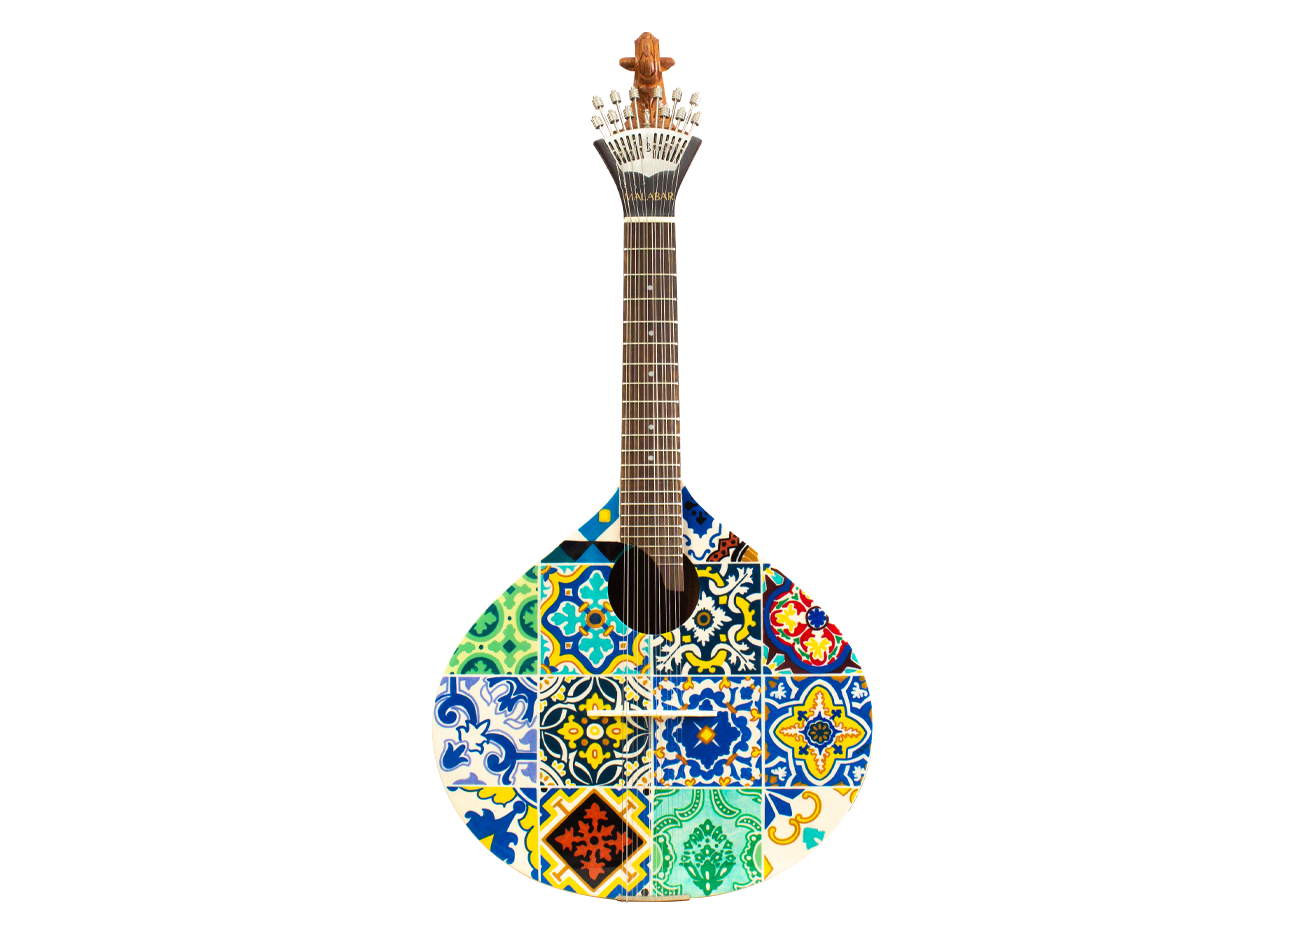 Azulejo guitar ii